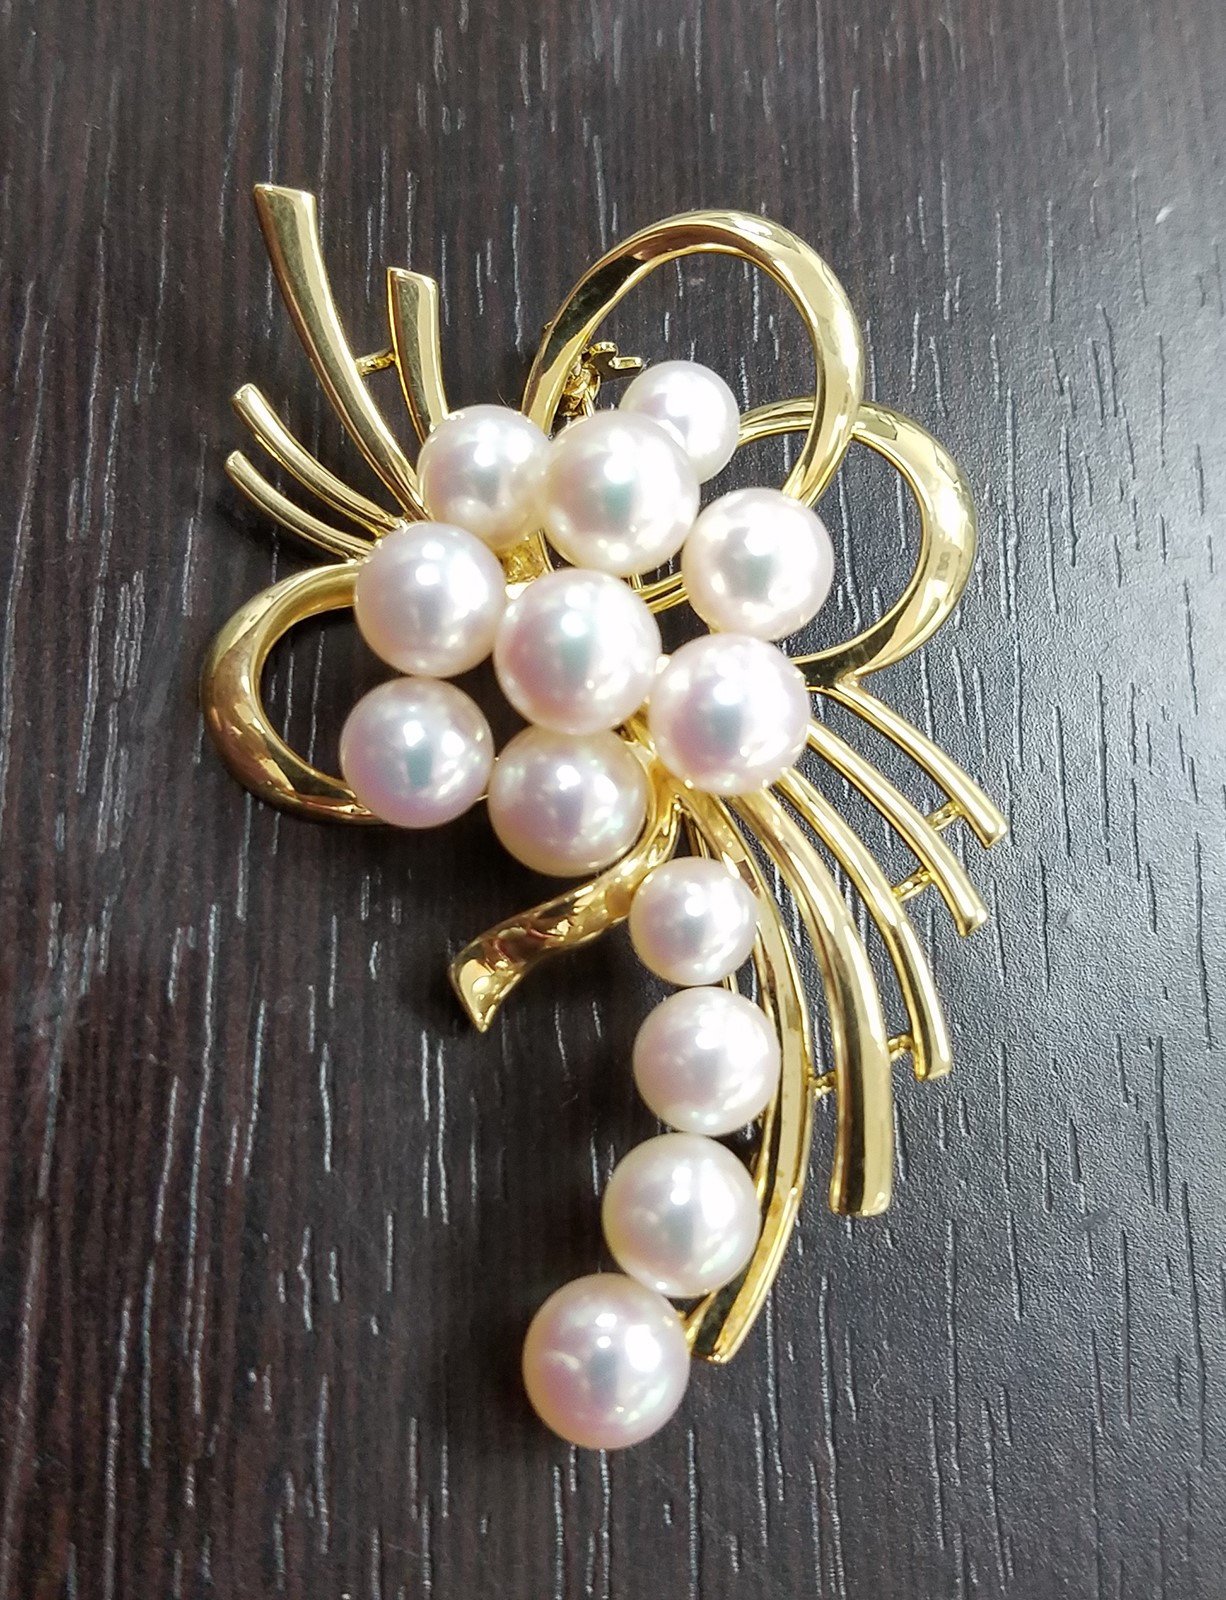 Mikimoto cultured Akoya pink tone pearl brooch / pin In 18k yellow gold